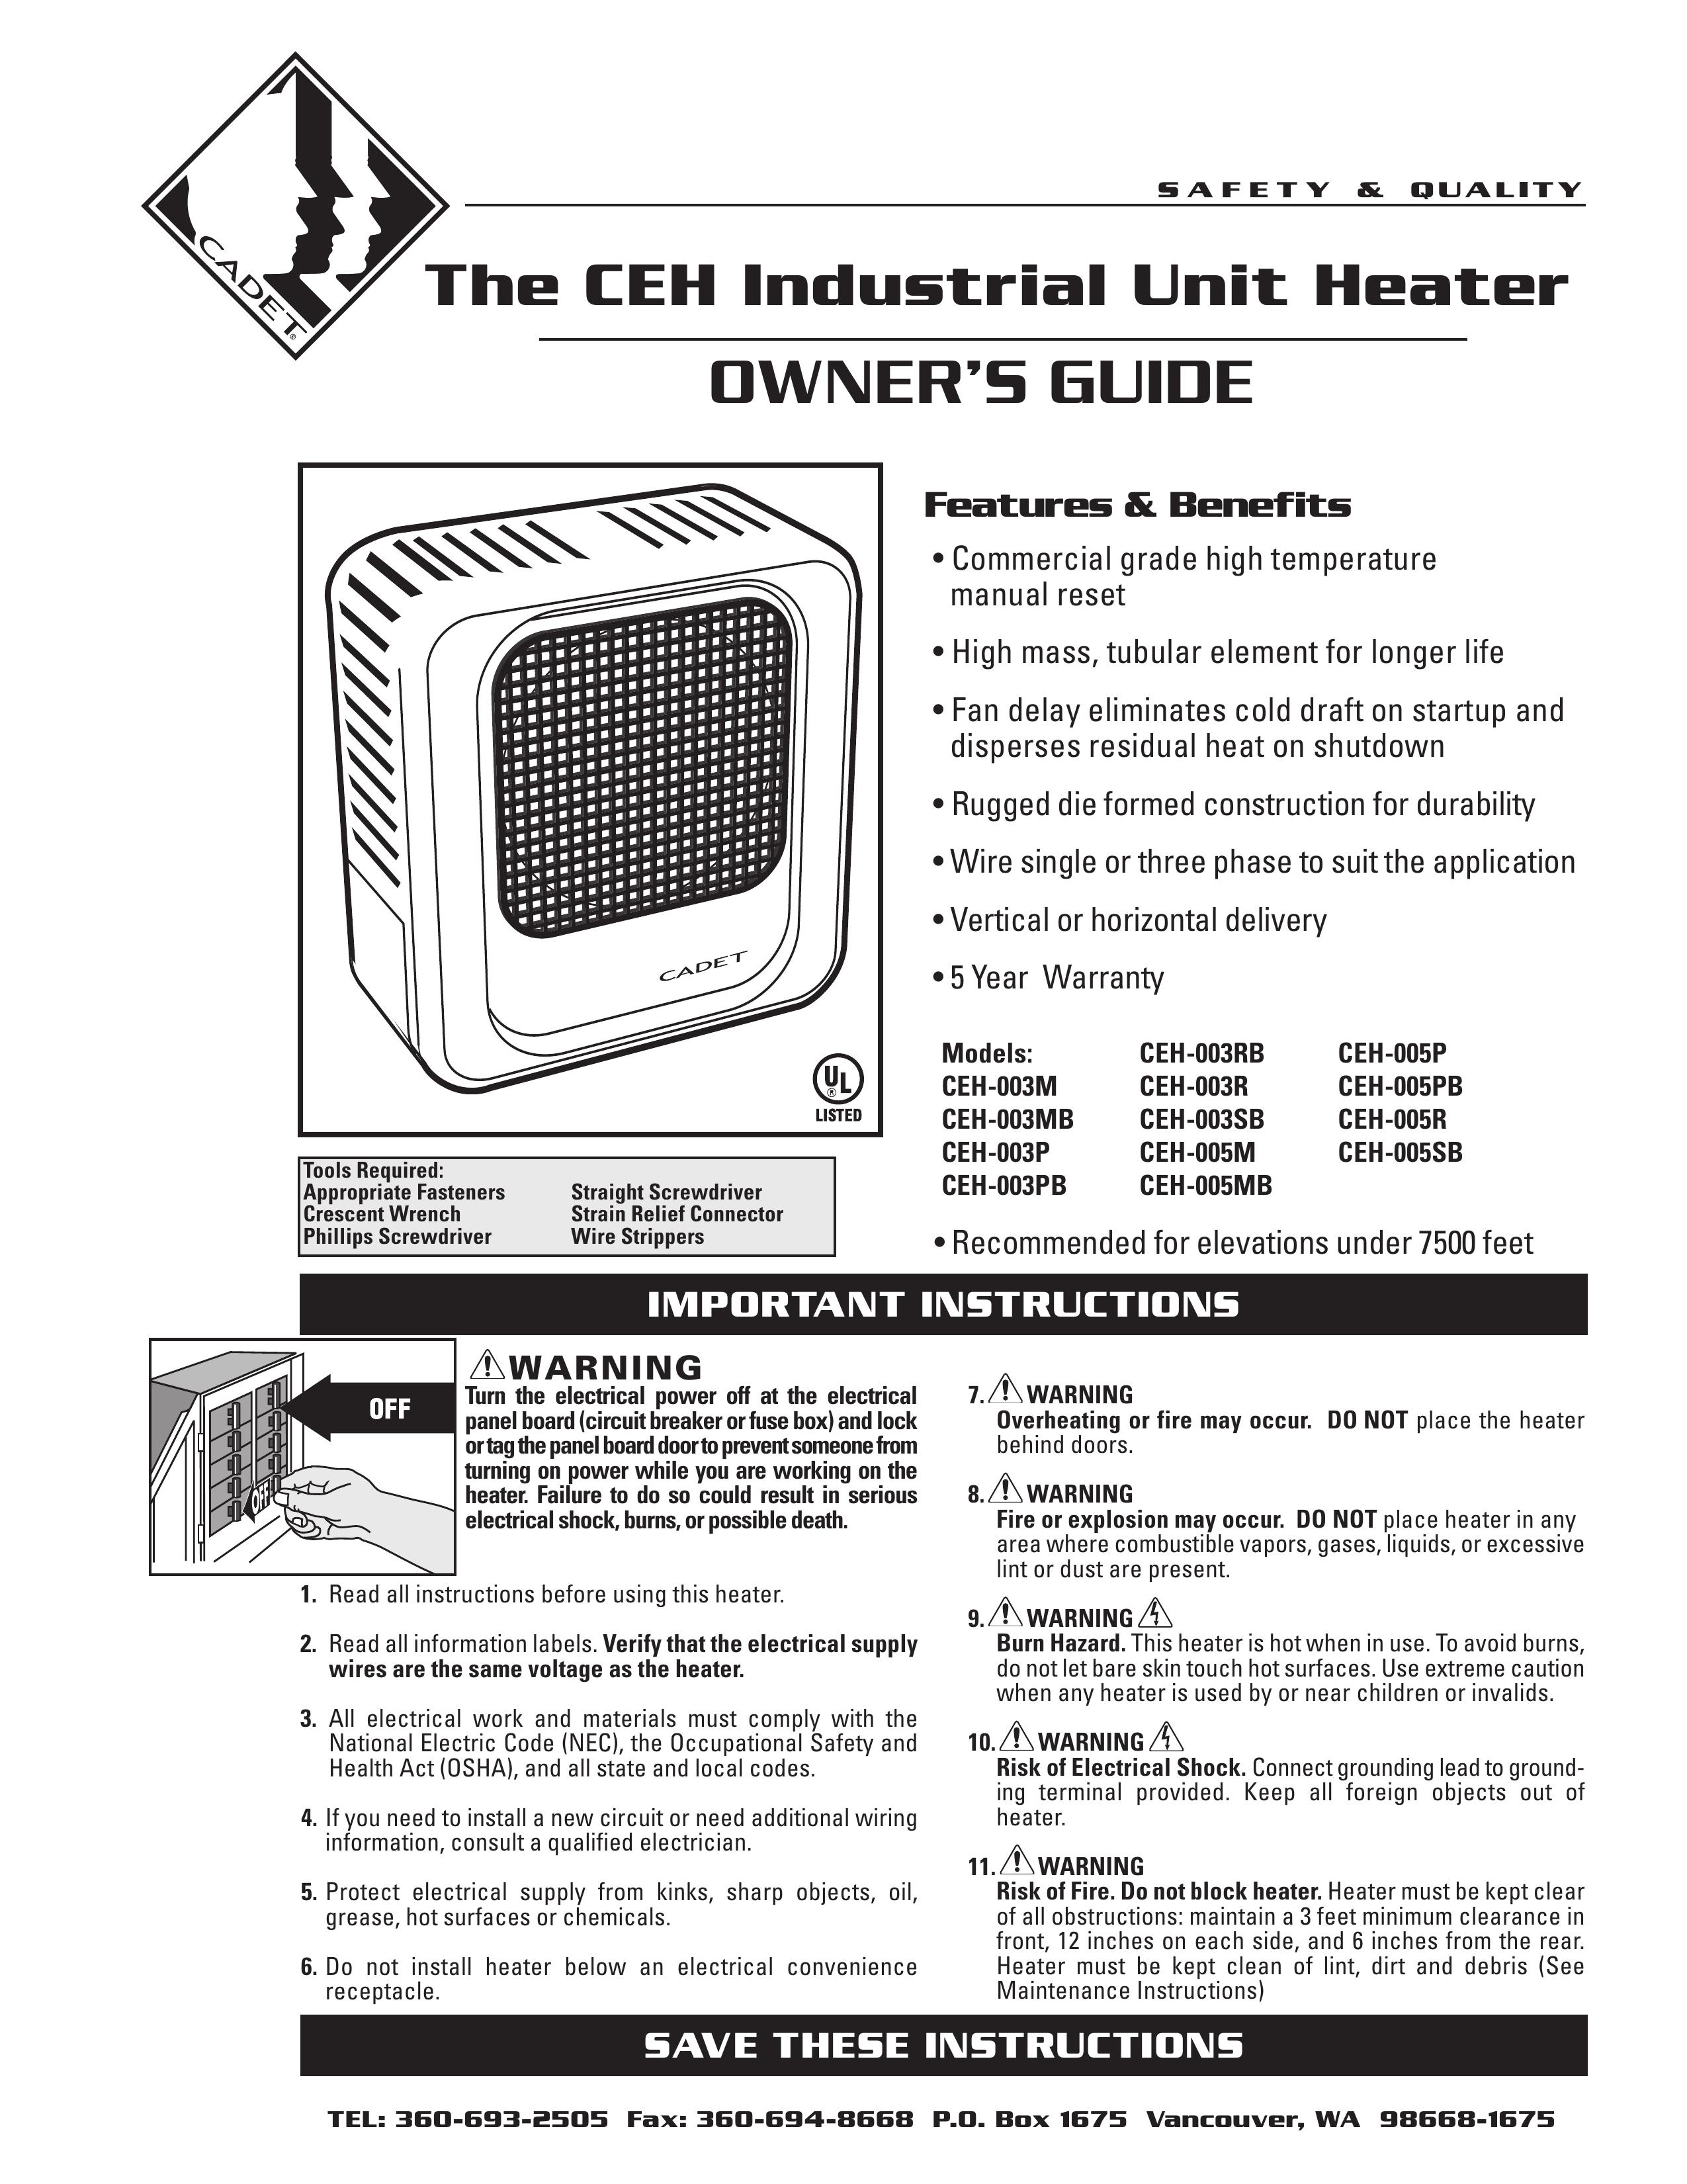 Cadet CEH-005M Patio Heater User Manual